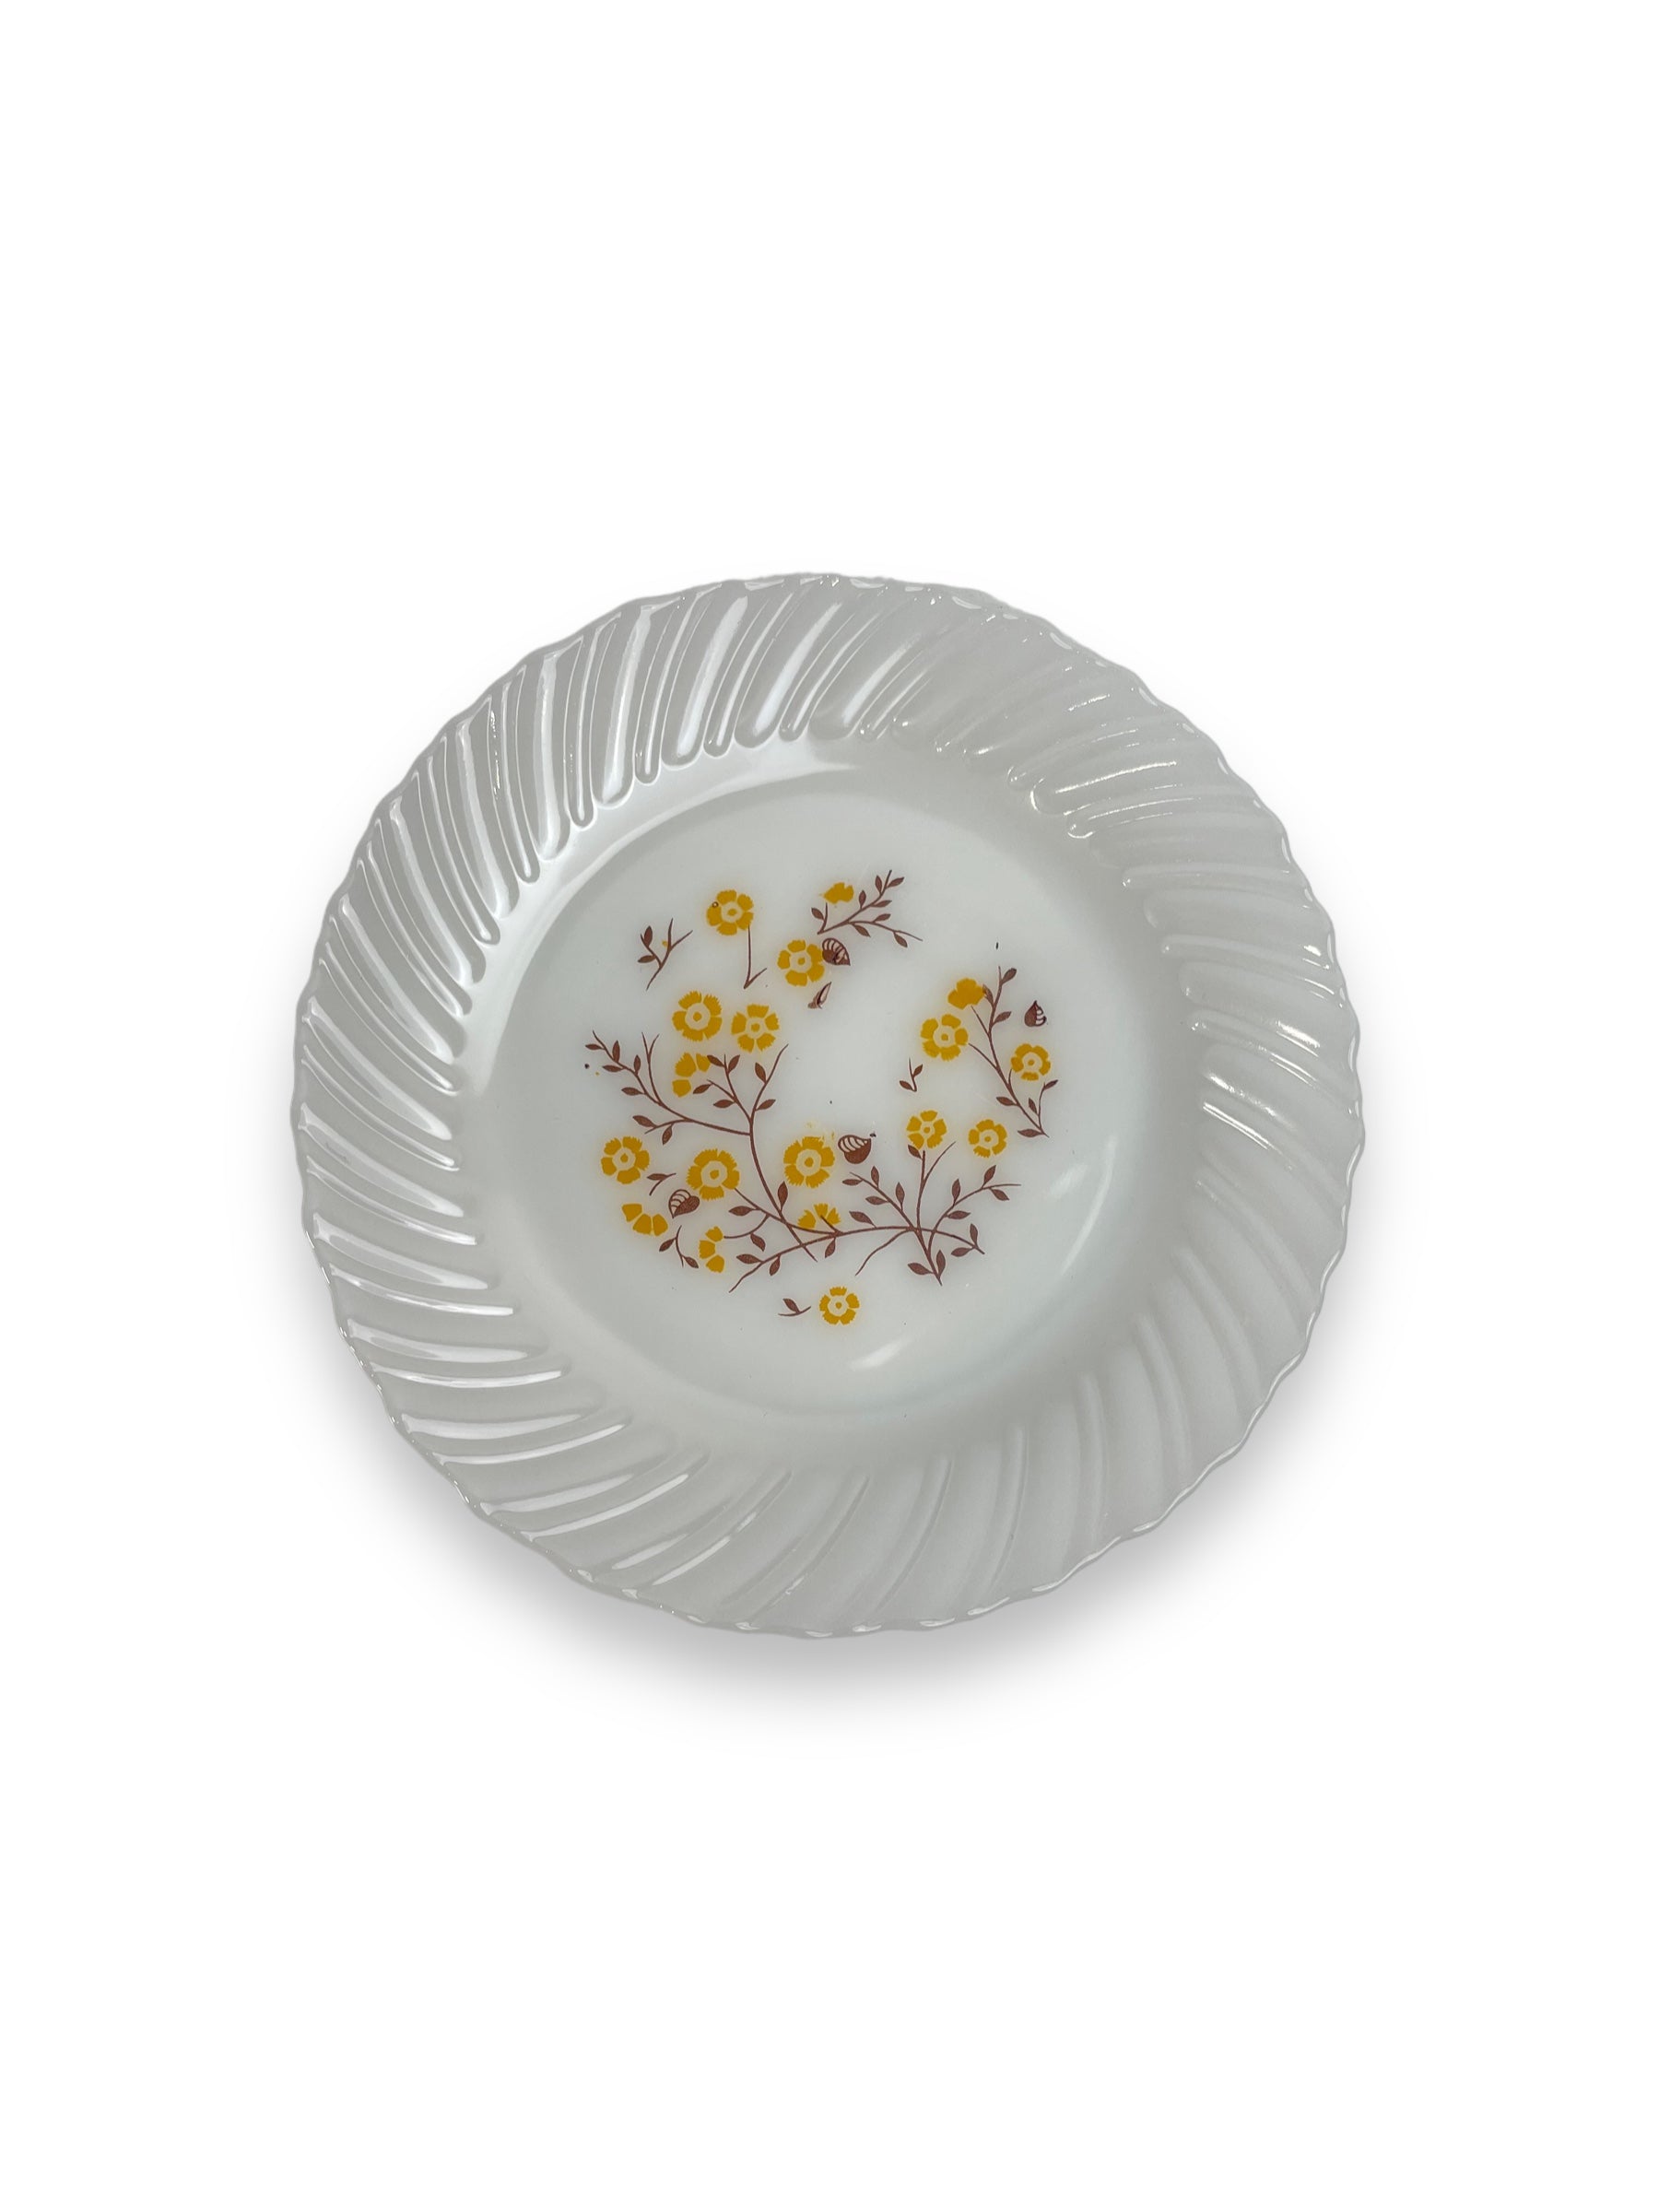 Set of 4 vintage 7-inch Termocrisa Milk Glass dessert plates